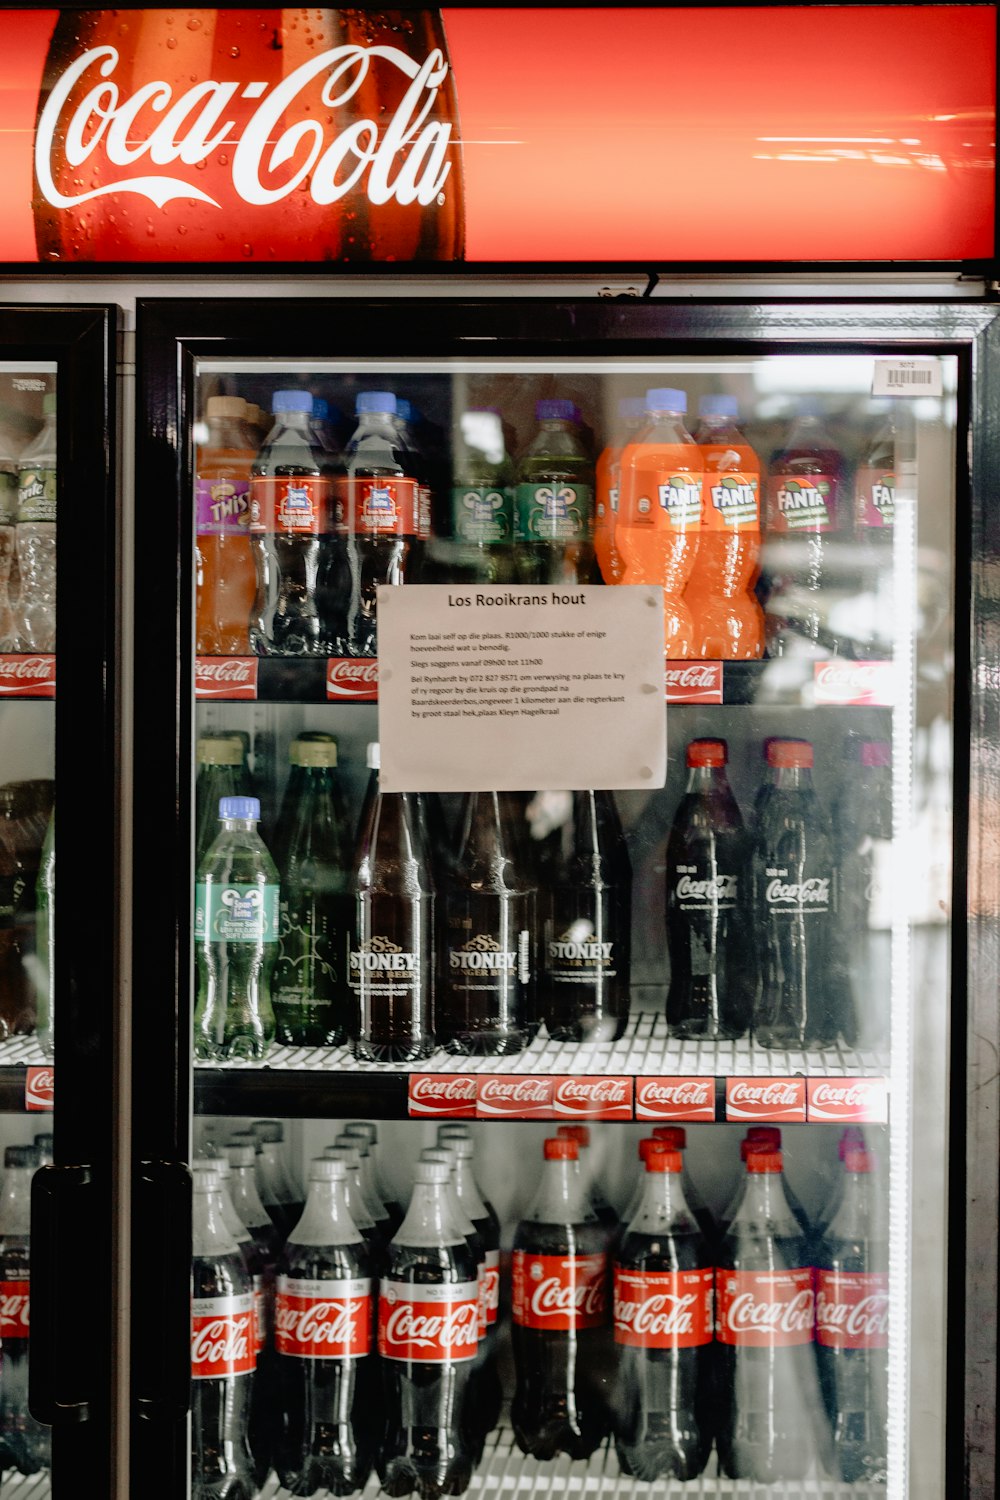 soda bottle inside commercial refrigerator